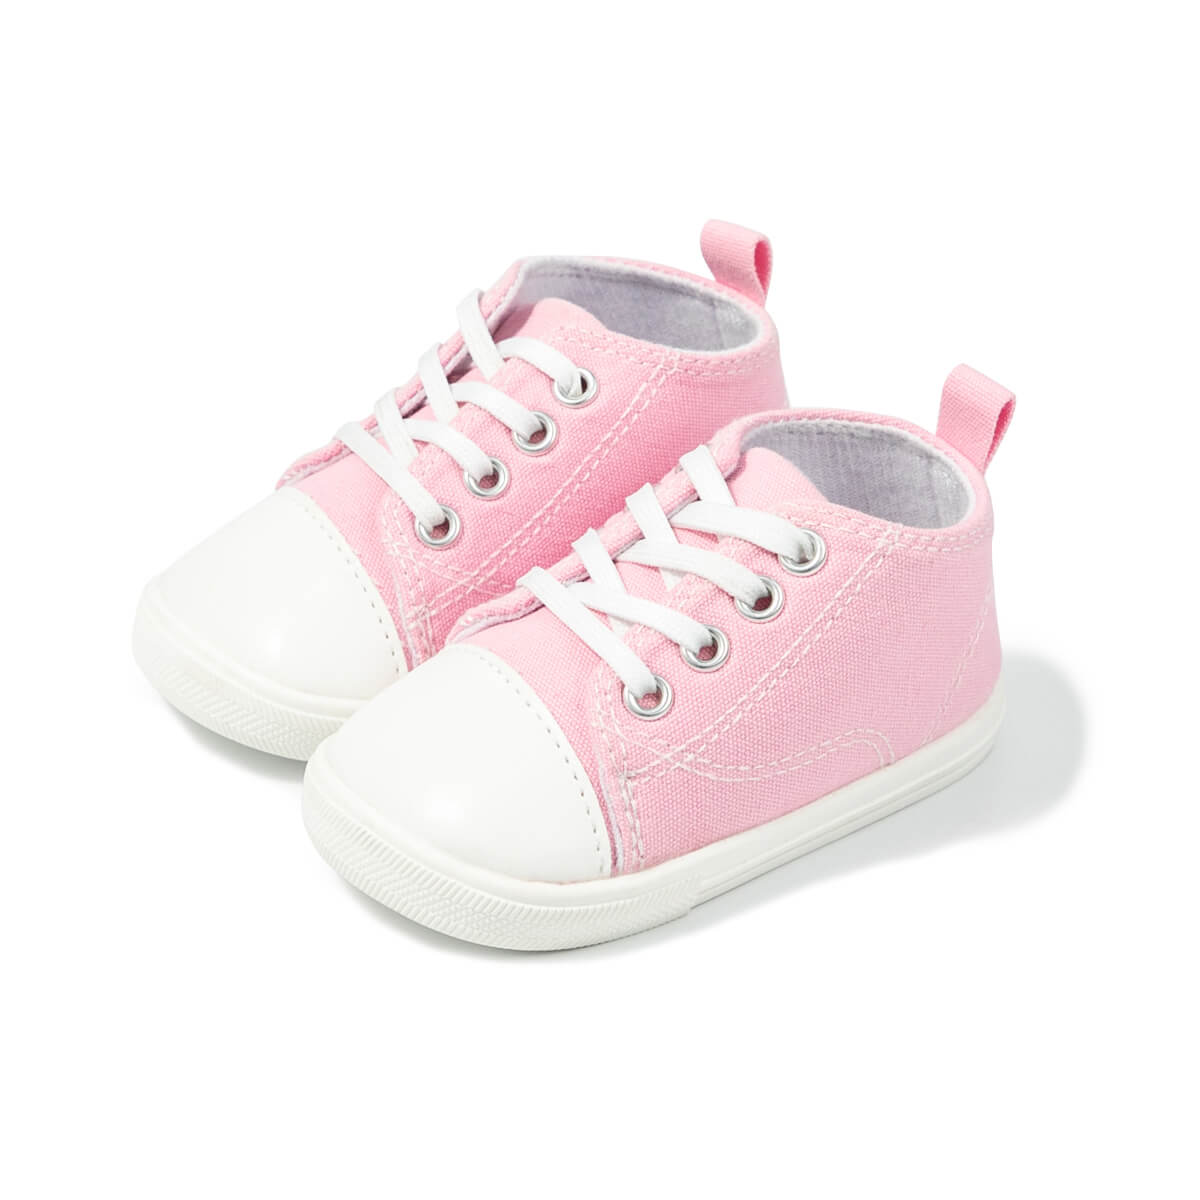 Leo 1st Walker Baby Shoes - Pink